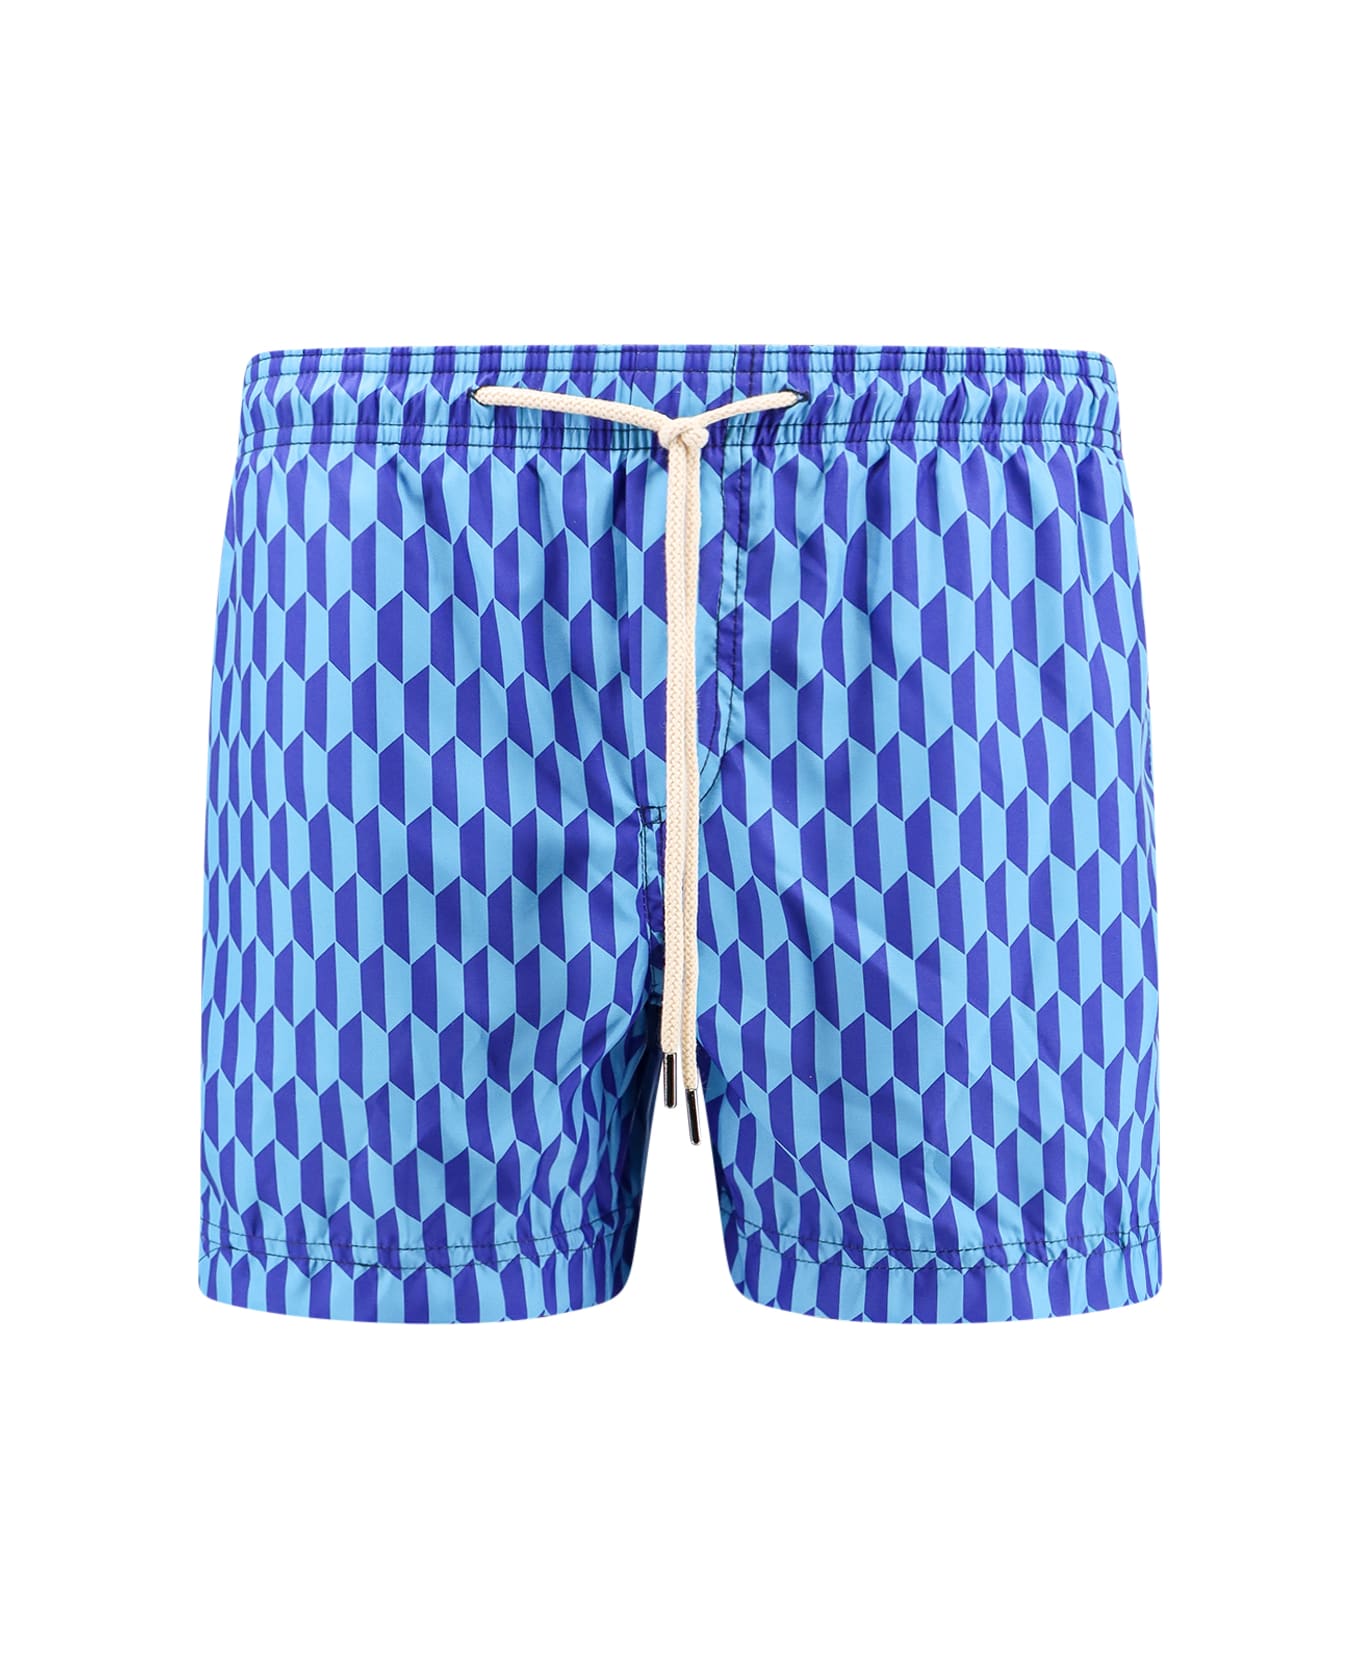 Peninsula Swimwear Swim Shorts - Blue